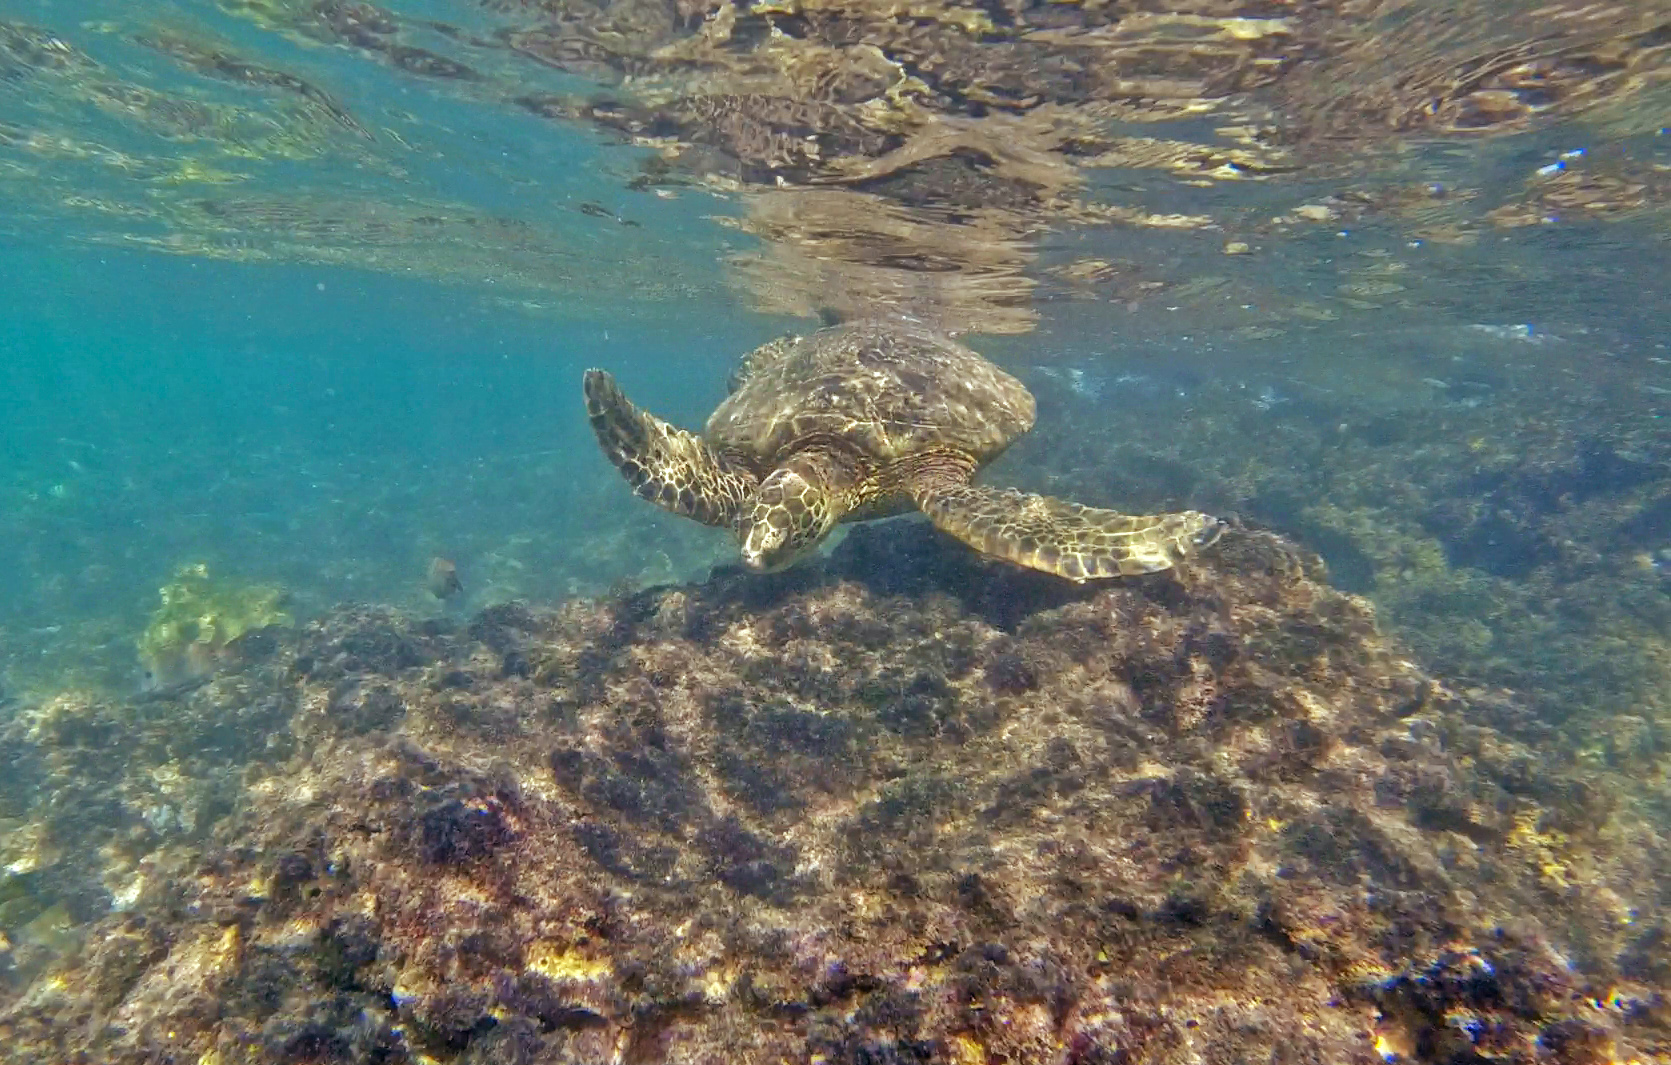 Jet Snorkel-Snorkeling with Turtles